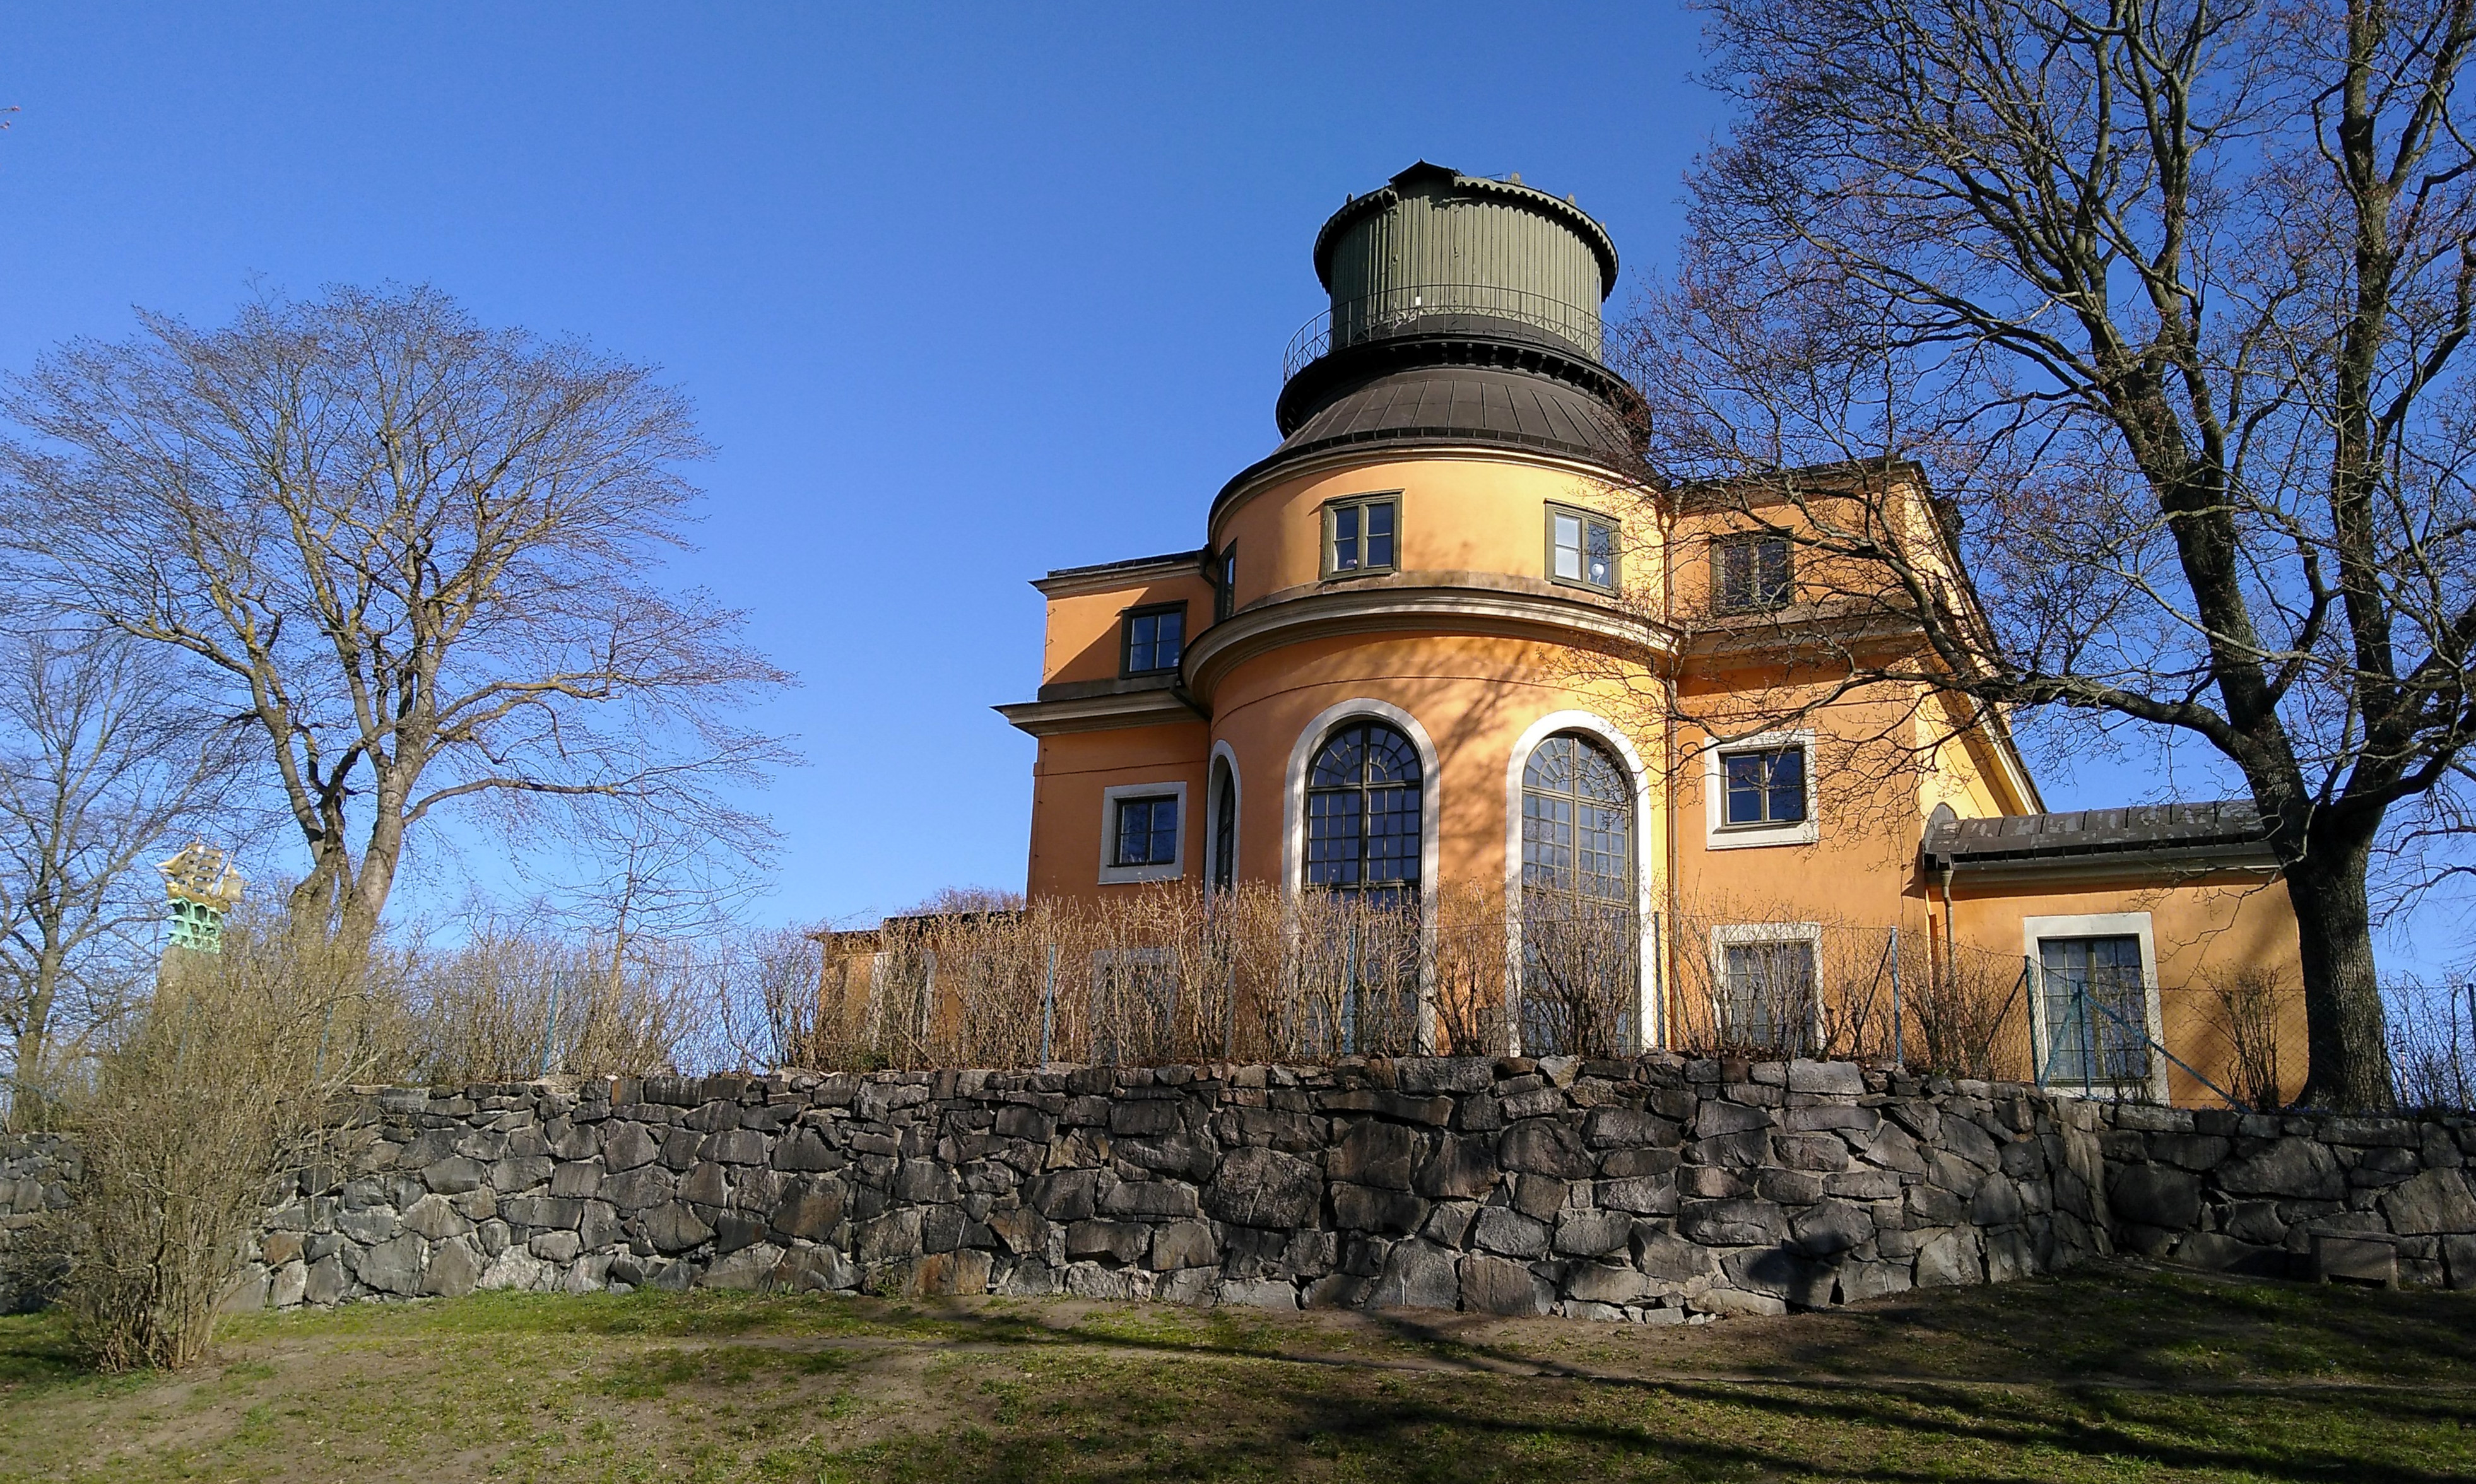 Stockholm's 18th century observatory